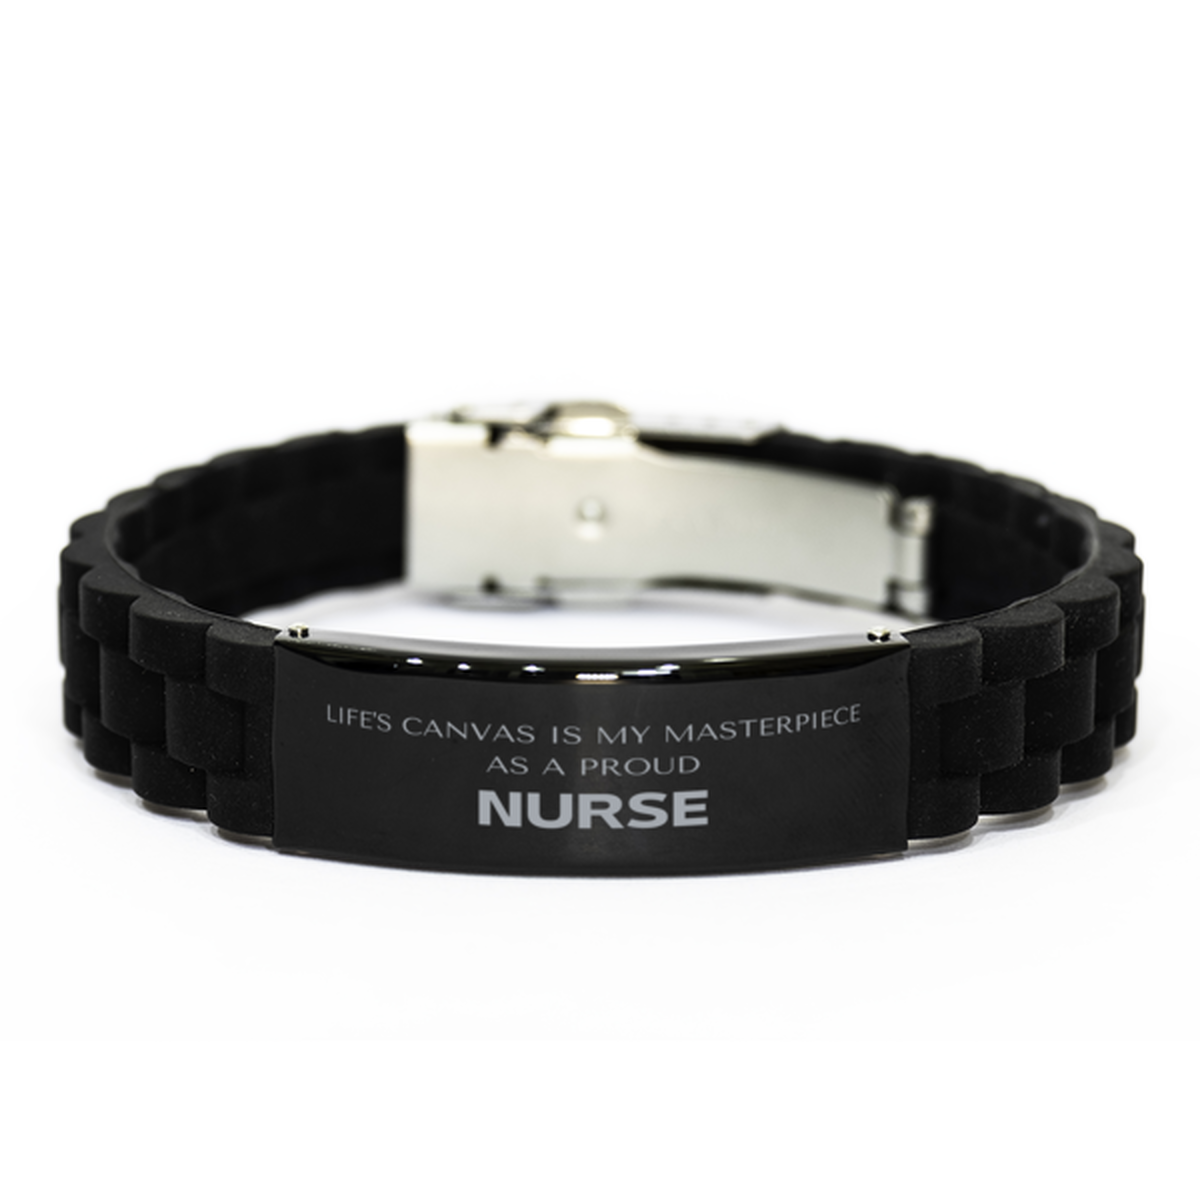 Proud Nurse Gifts, Life's canvas is my masterpiece, Epic Birthday Christmas Unique Black Glidelock Clasp Bracelet For Nurse, Coworkers, Men, Women, Friends